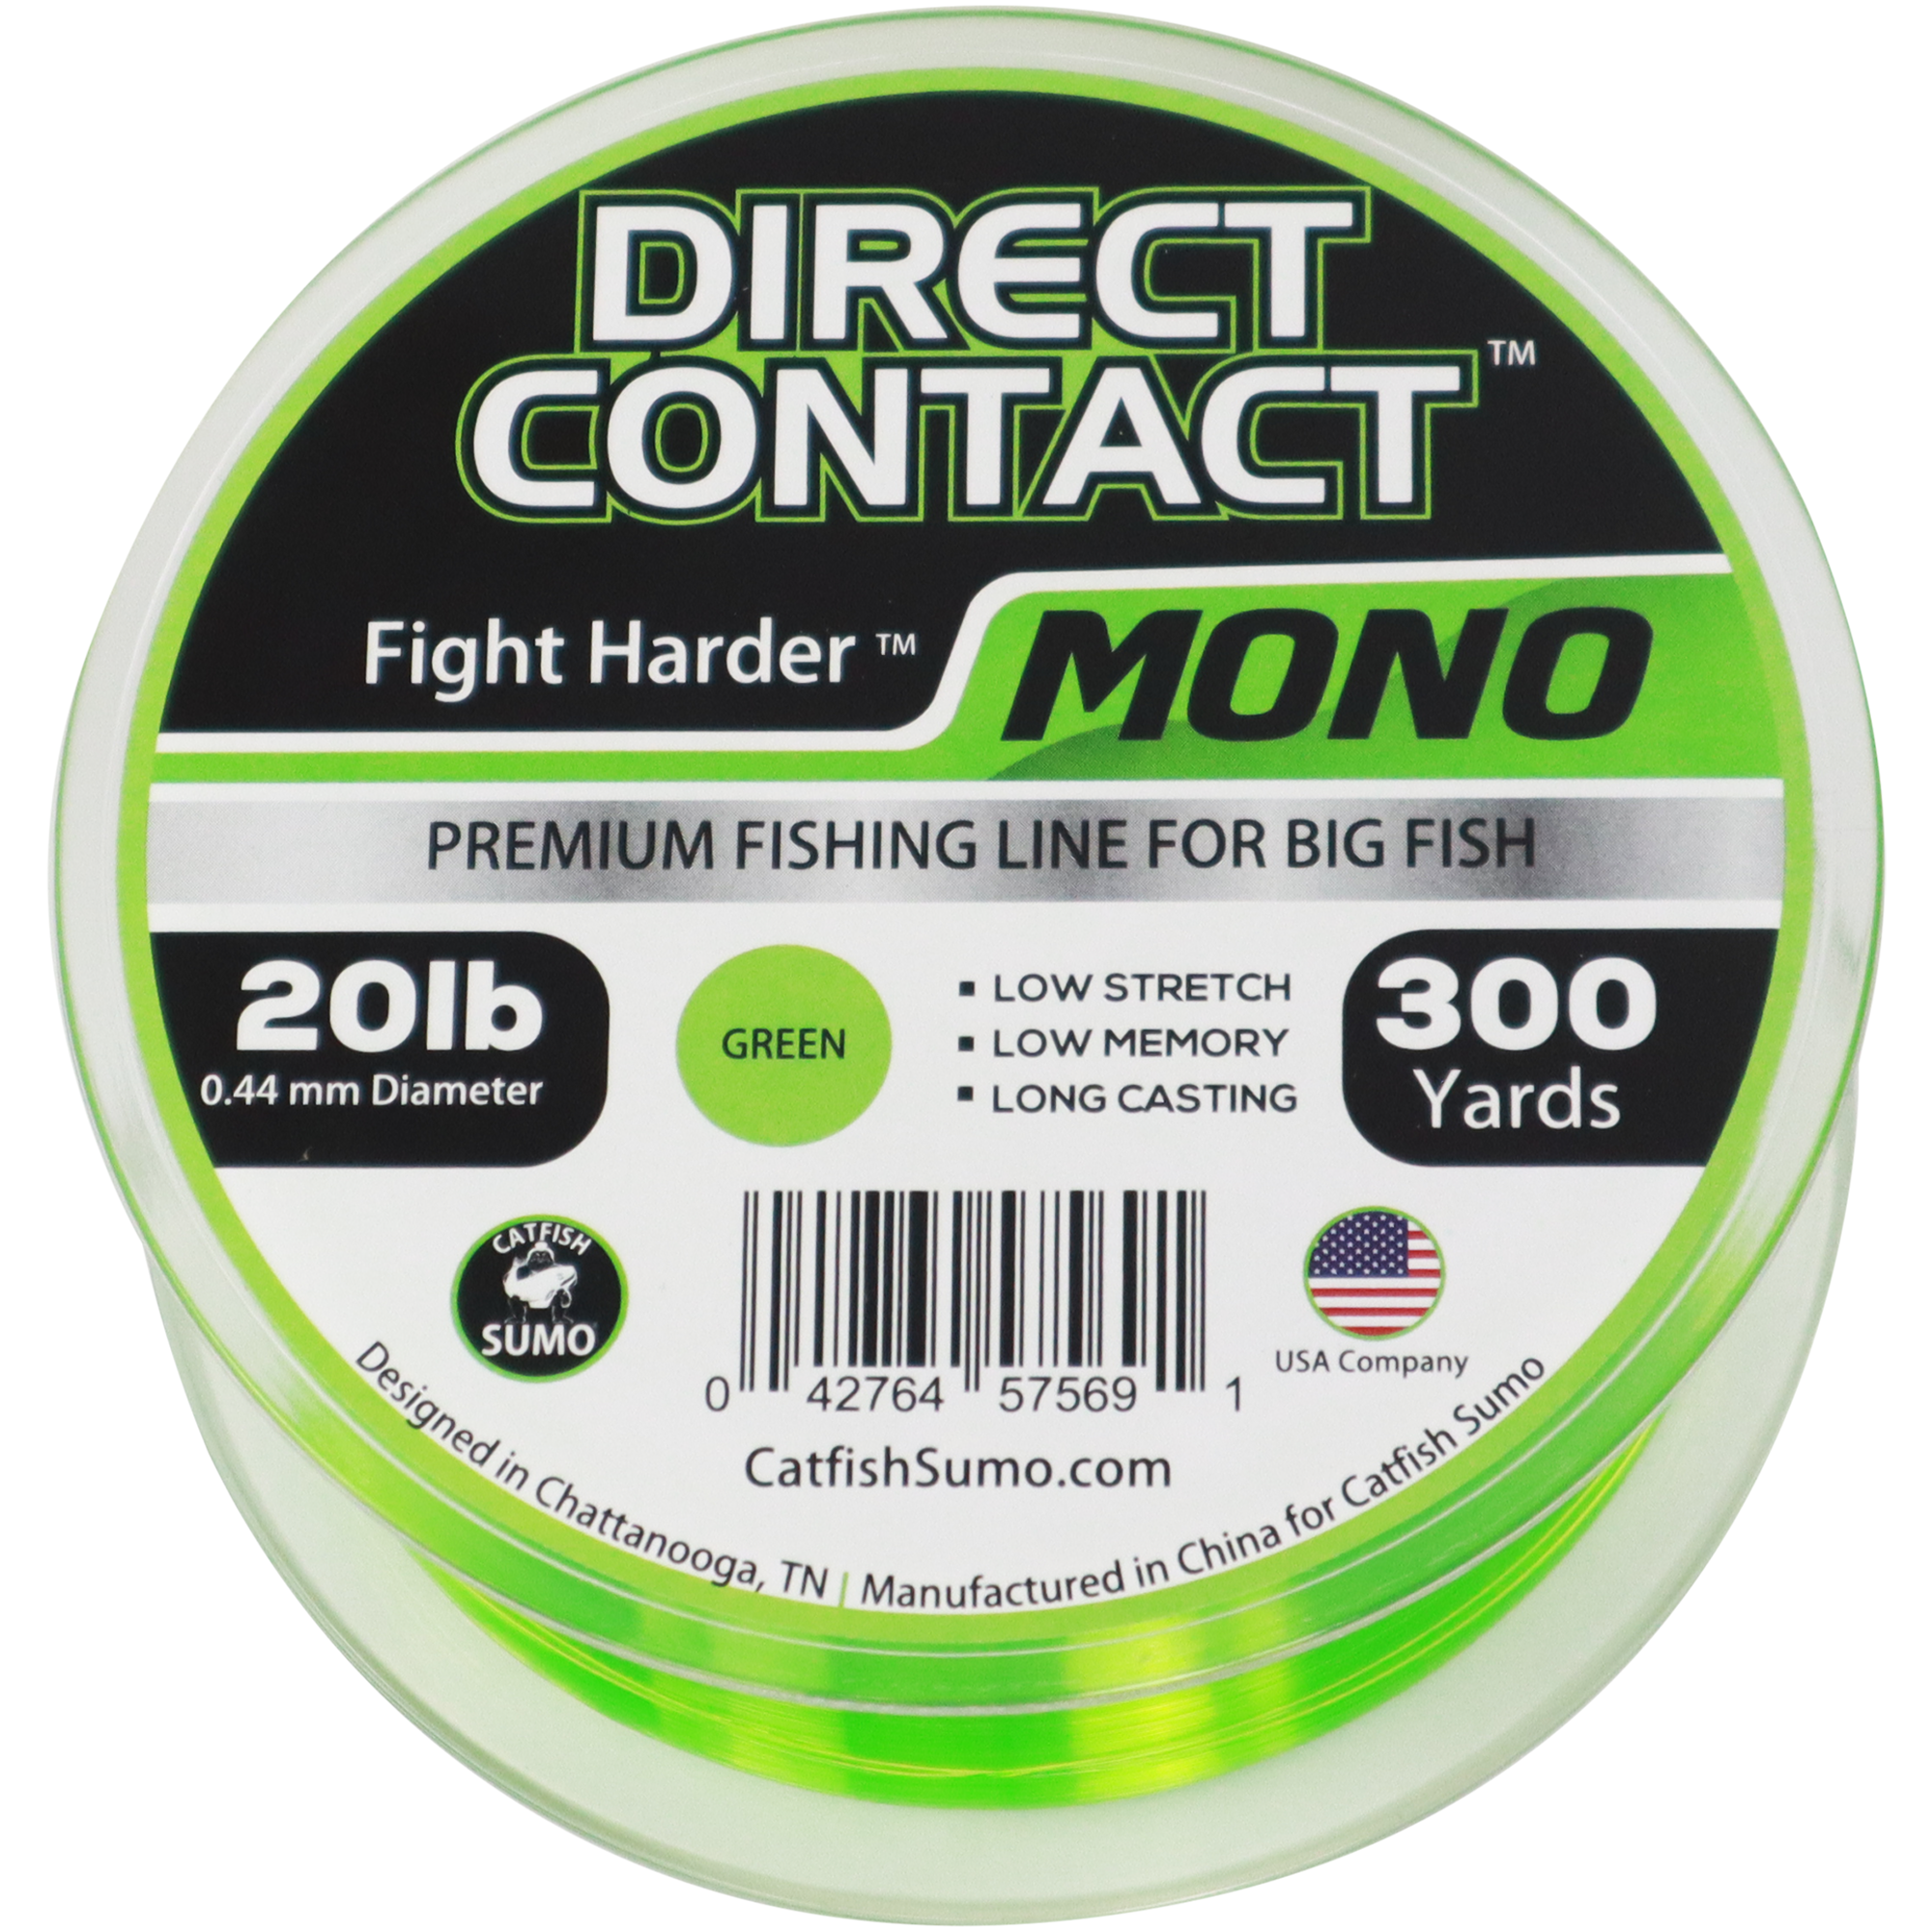 Direct Contact™ Premium Fishing Line for Big Fish, Mono, 300 Yard